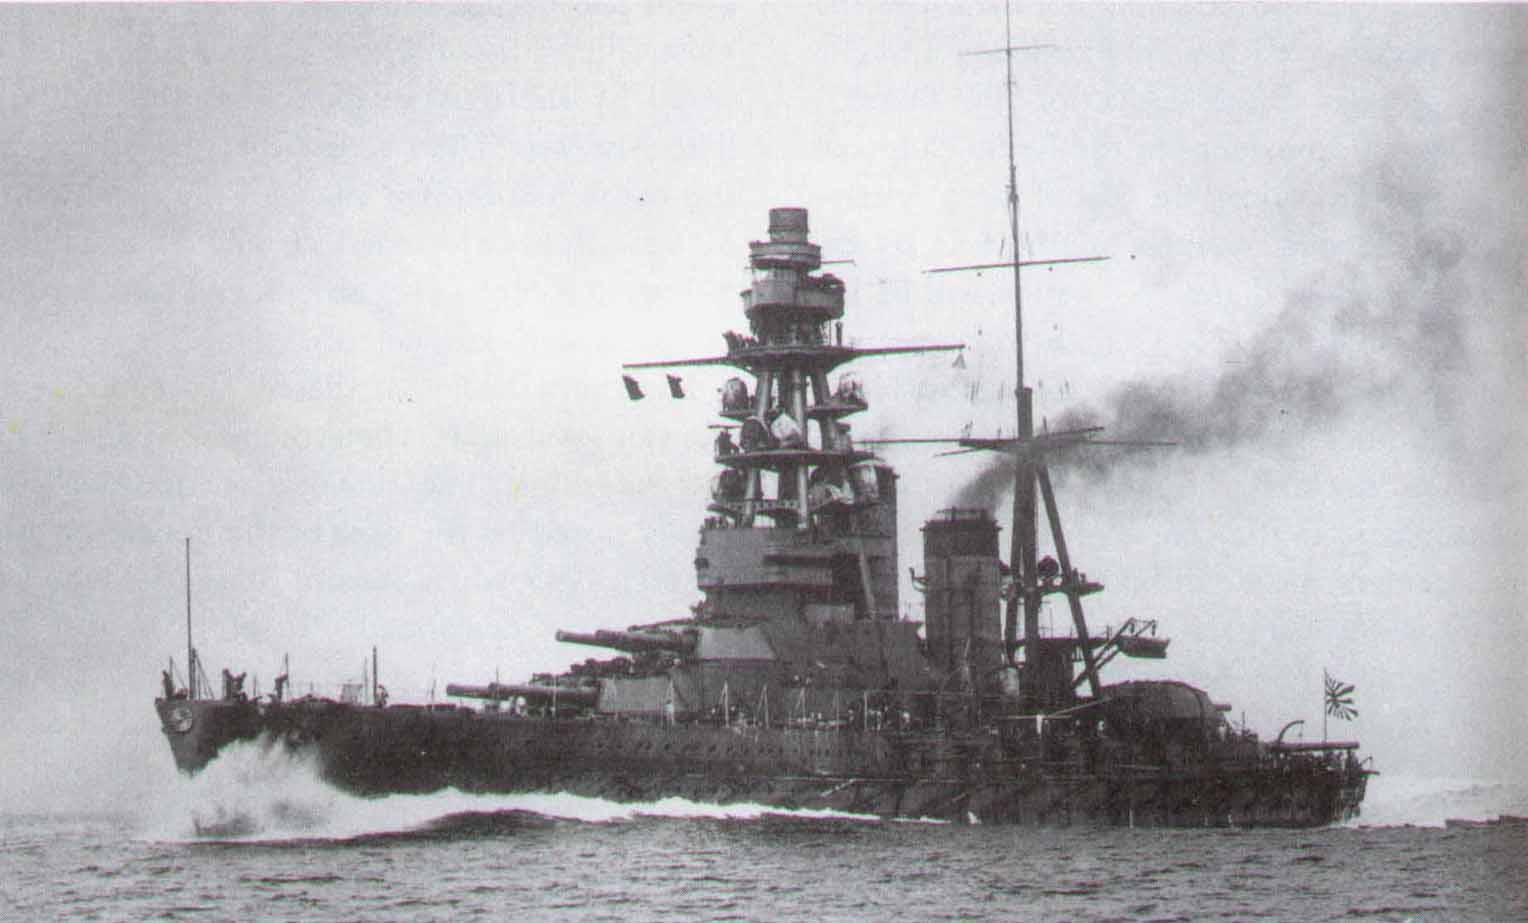 Admiral Yamamoto's flagship, the battleship Nagato...